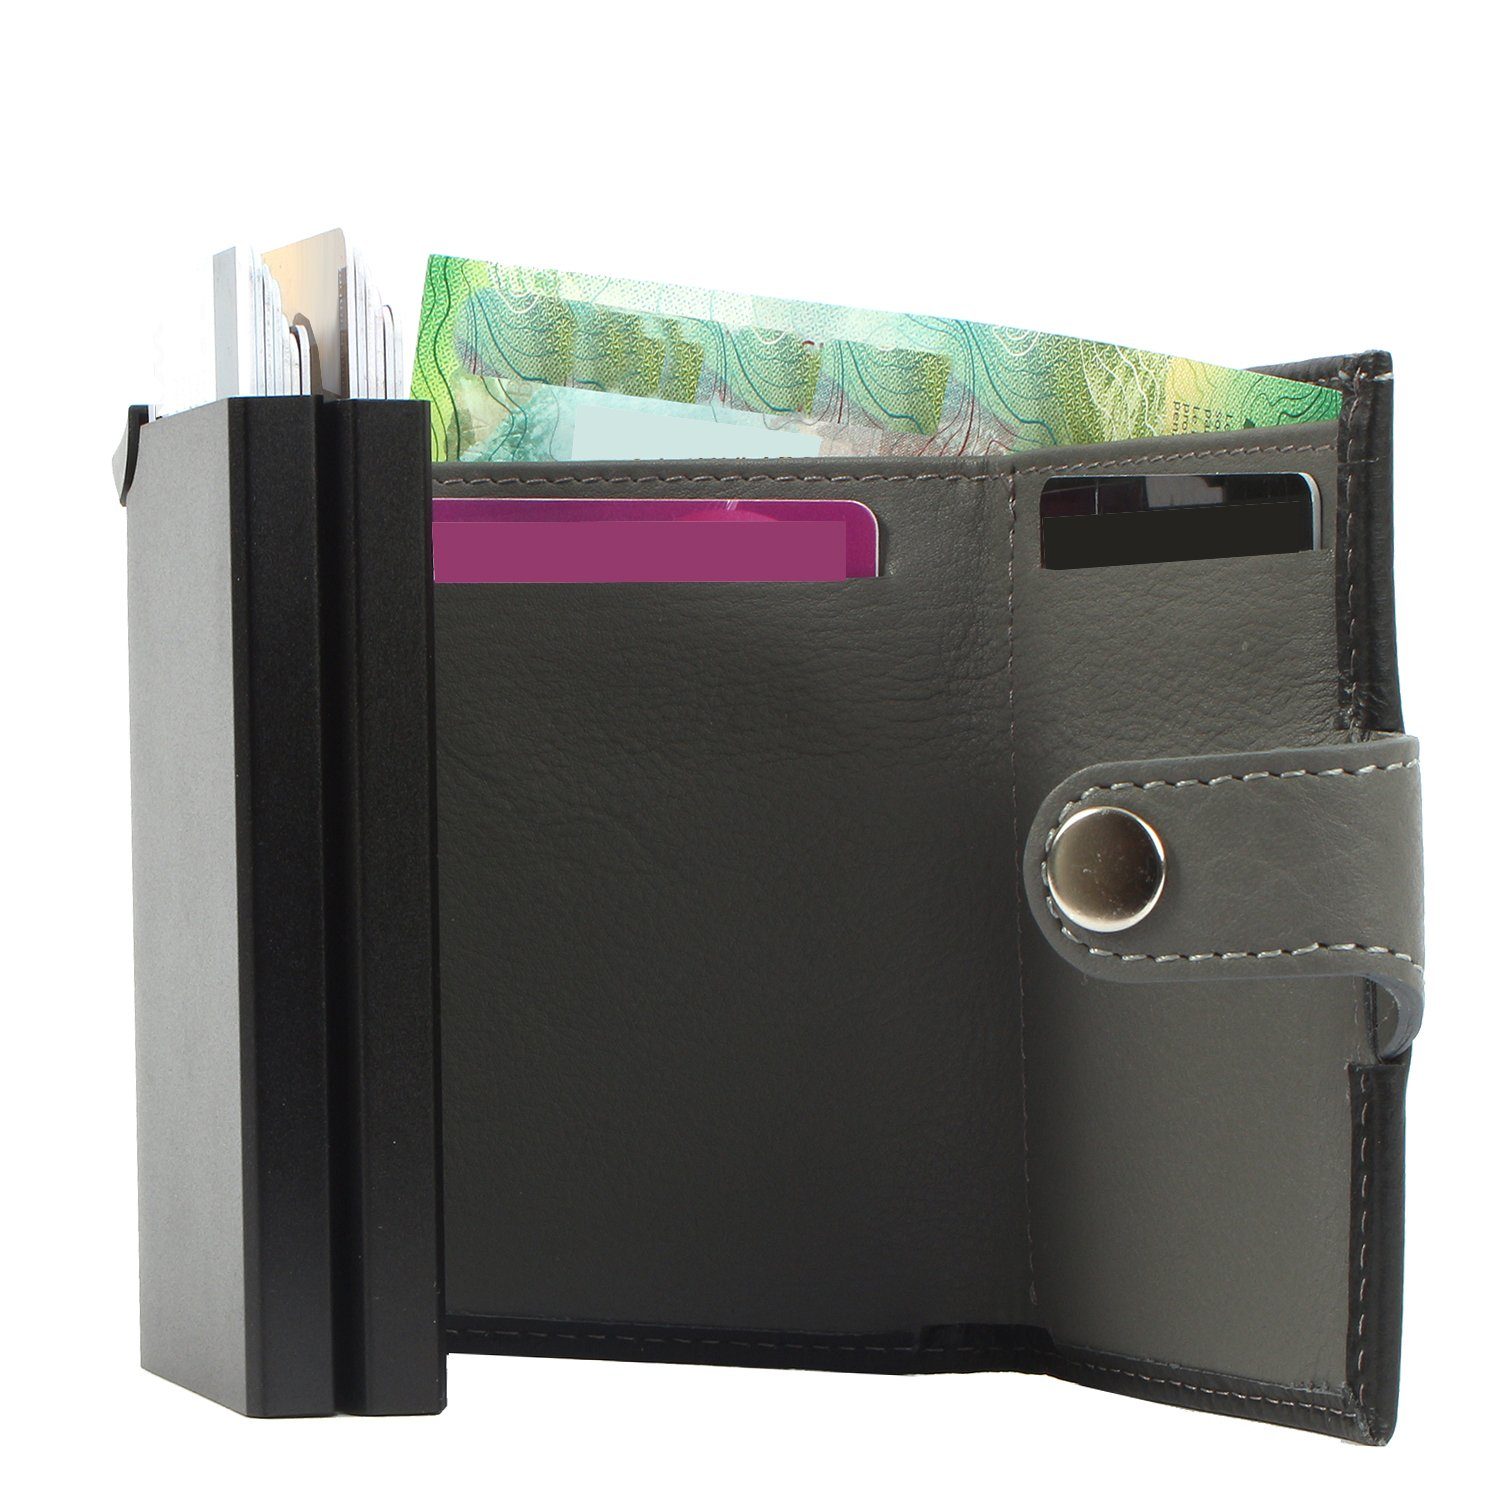 salmon Geldbörse leather, noonyu RFID Kreditkartenbörse Margelisch double aus Leder Upcycling Mini